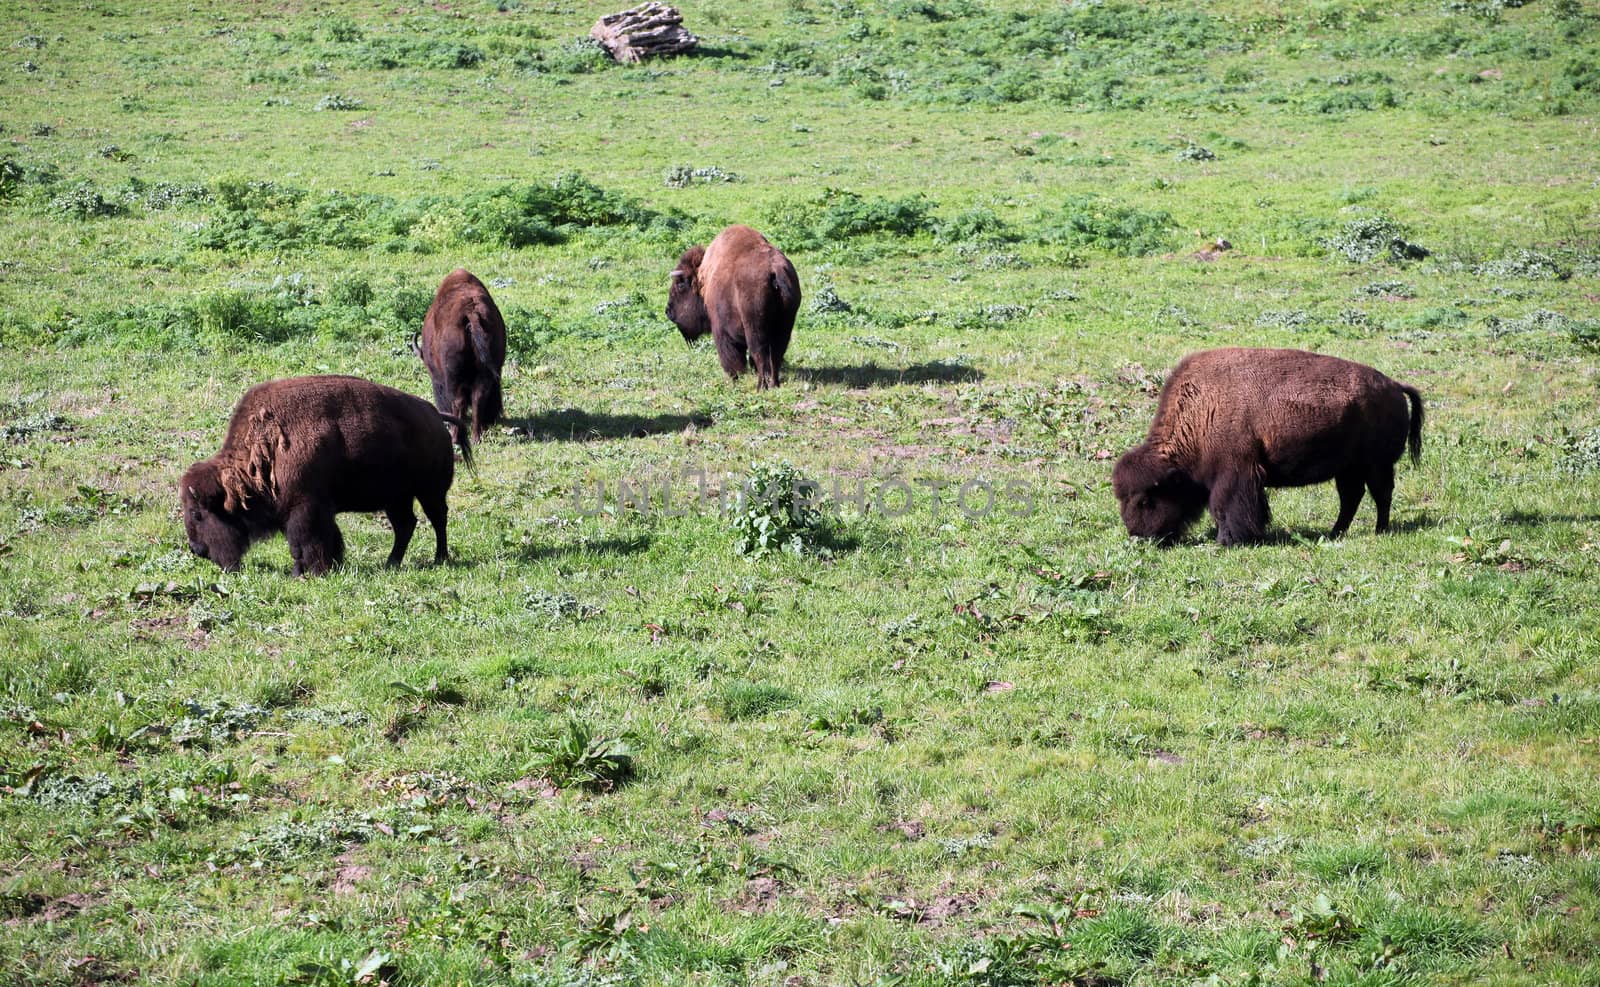 Buffalos grazing in the grass.